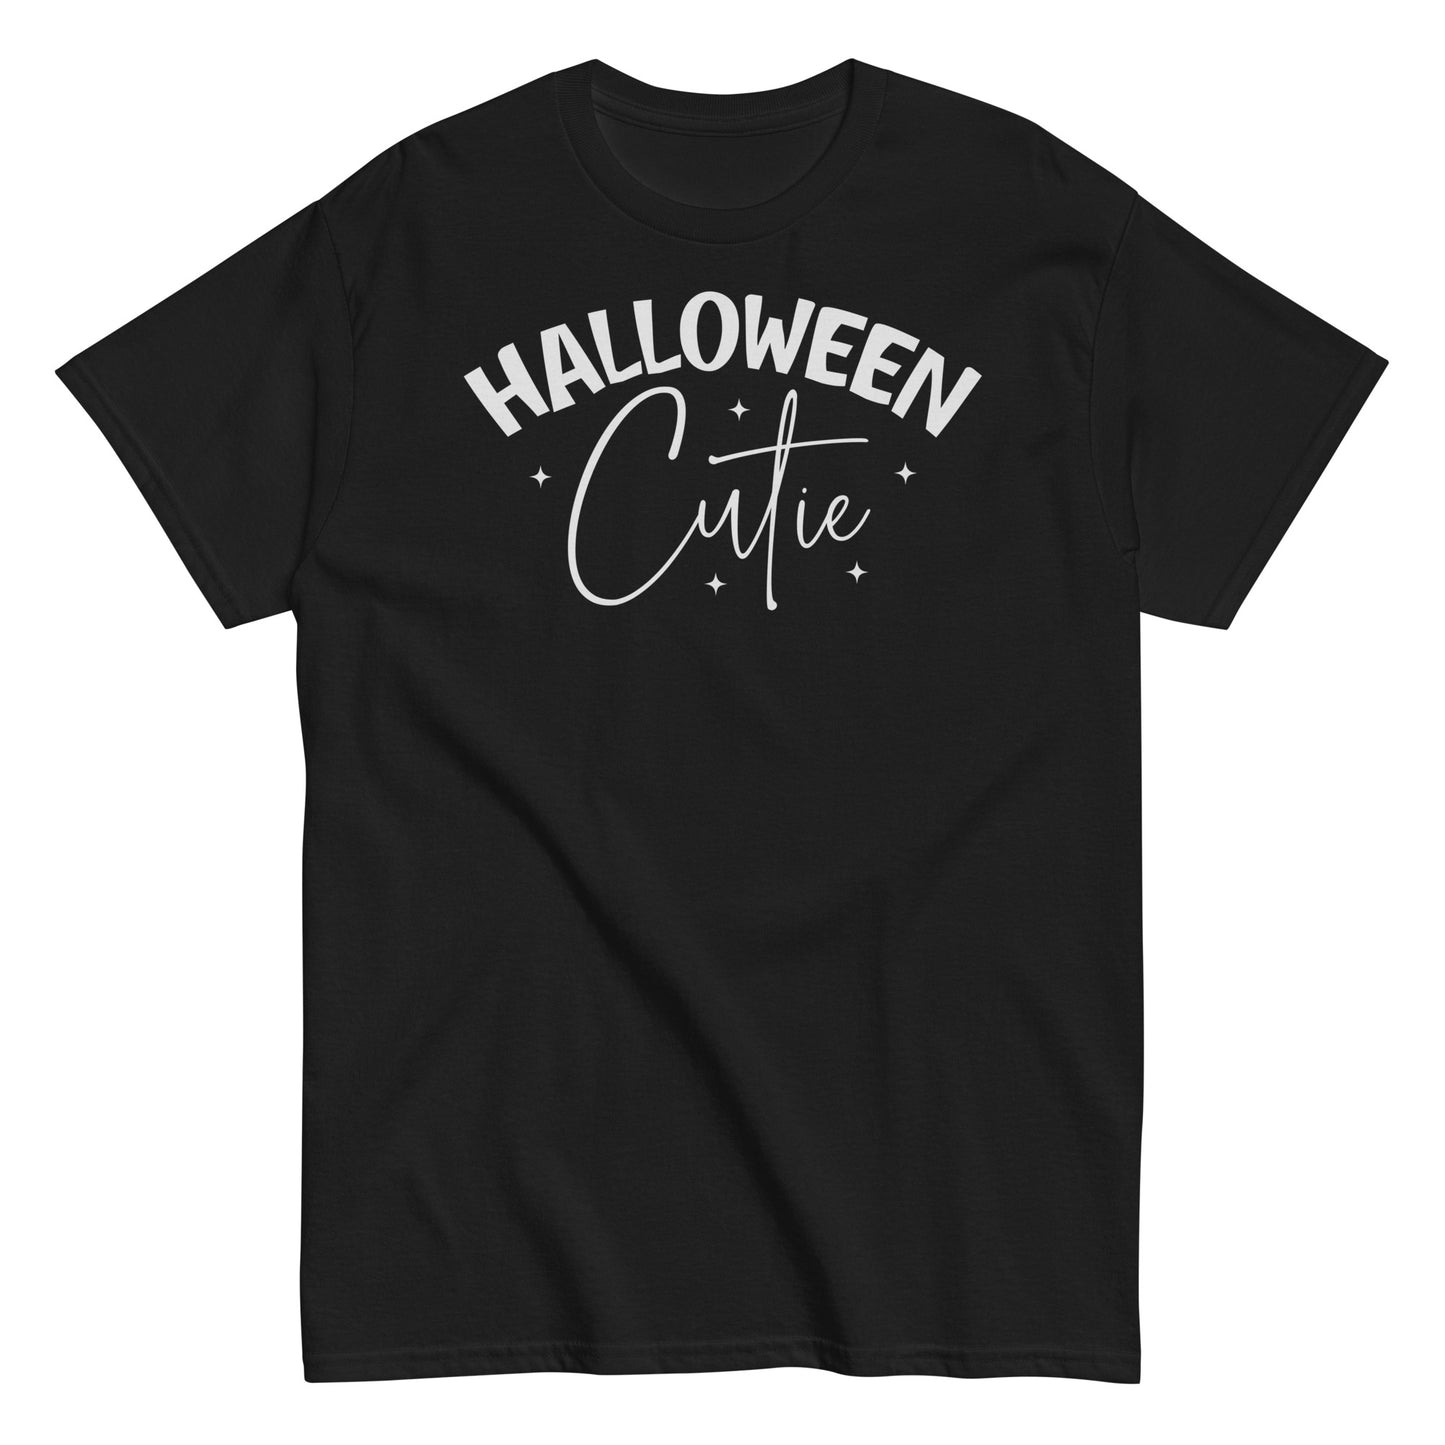 Spooky Meets Sweet, Halloween Cutie Tee